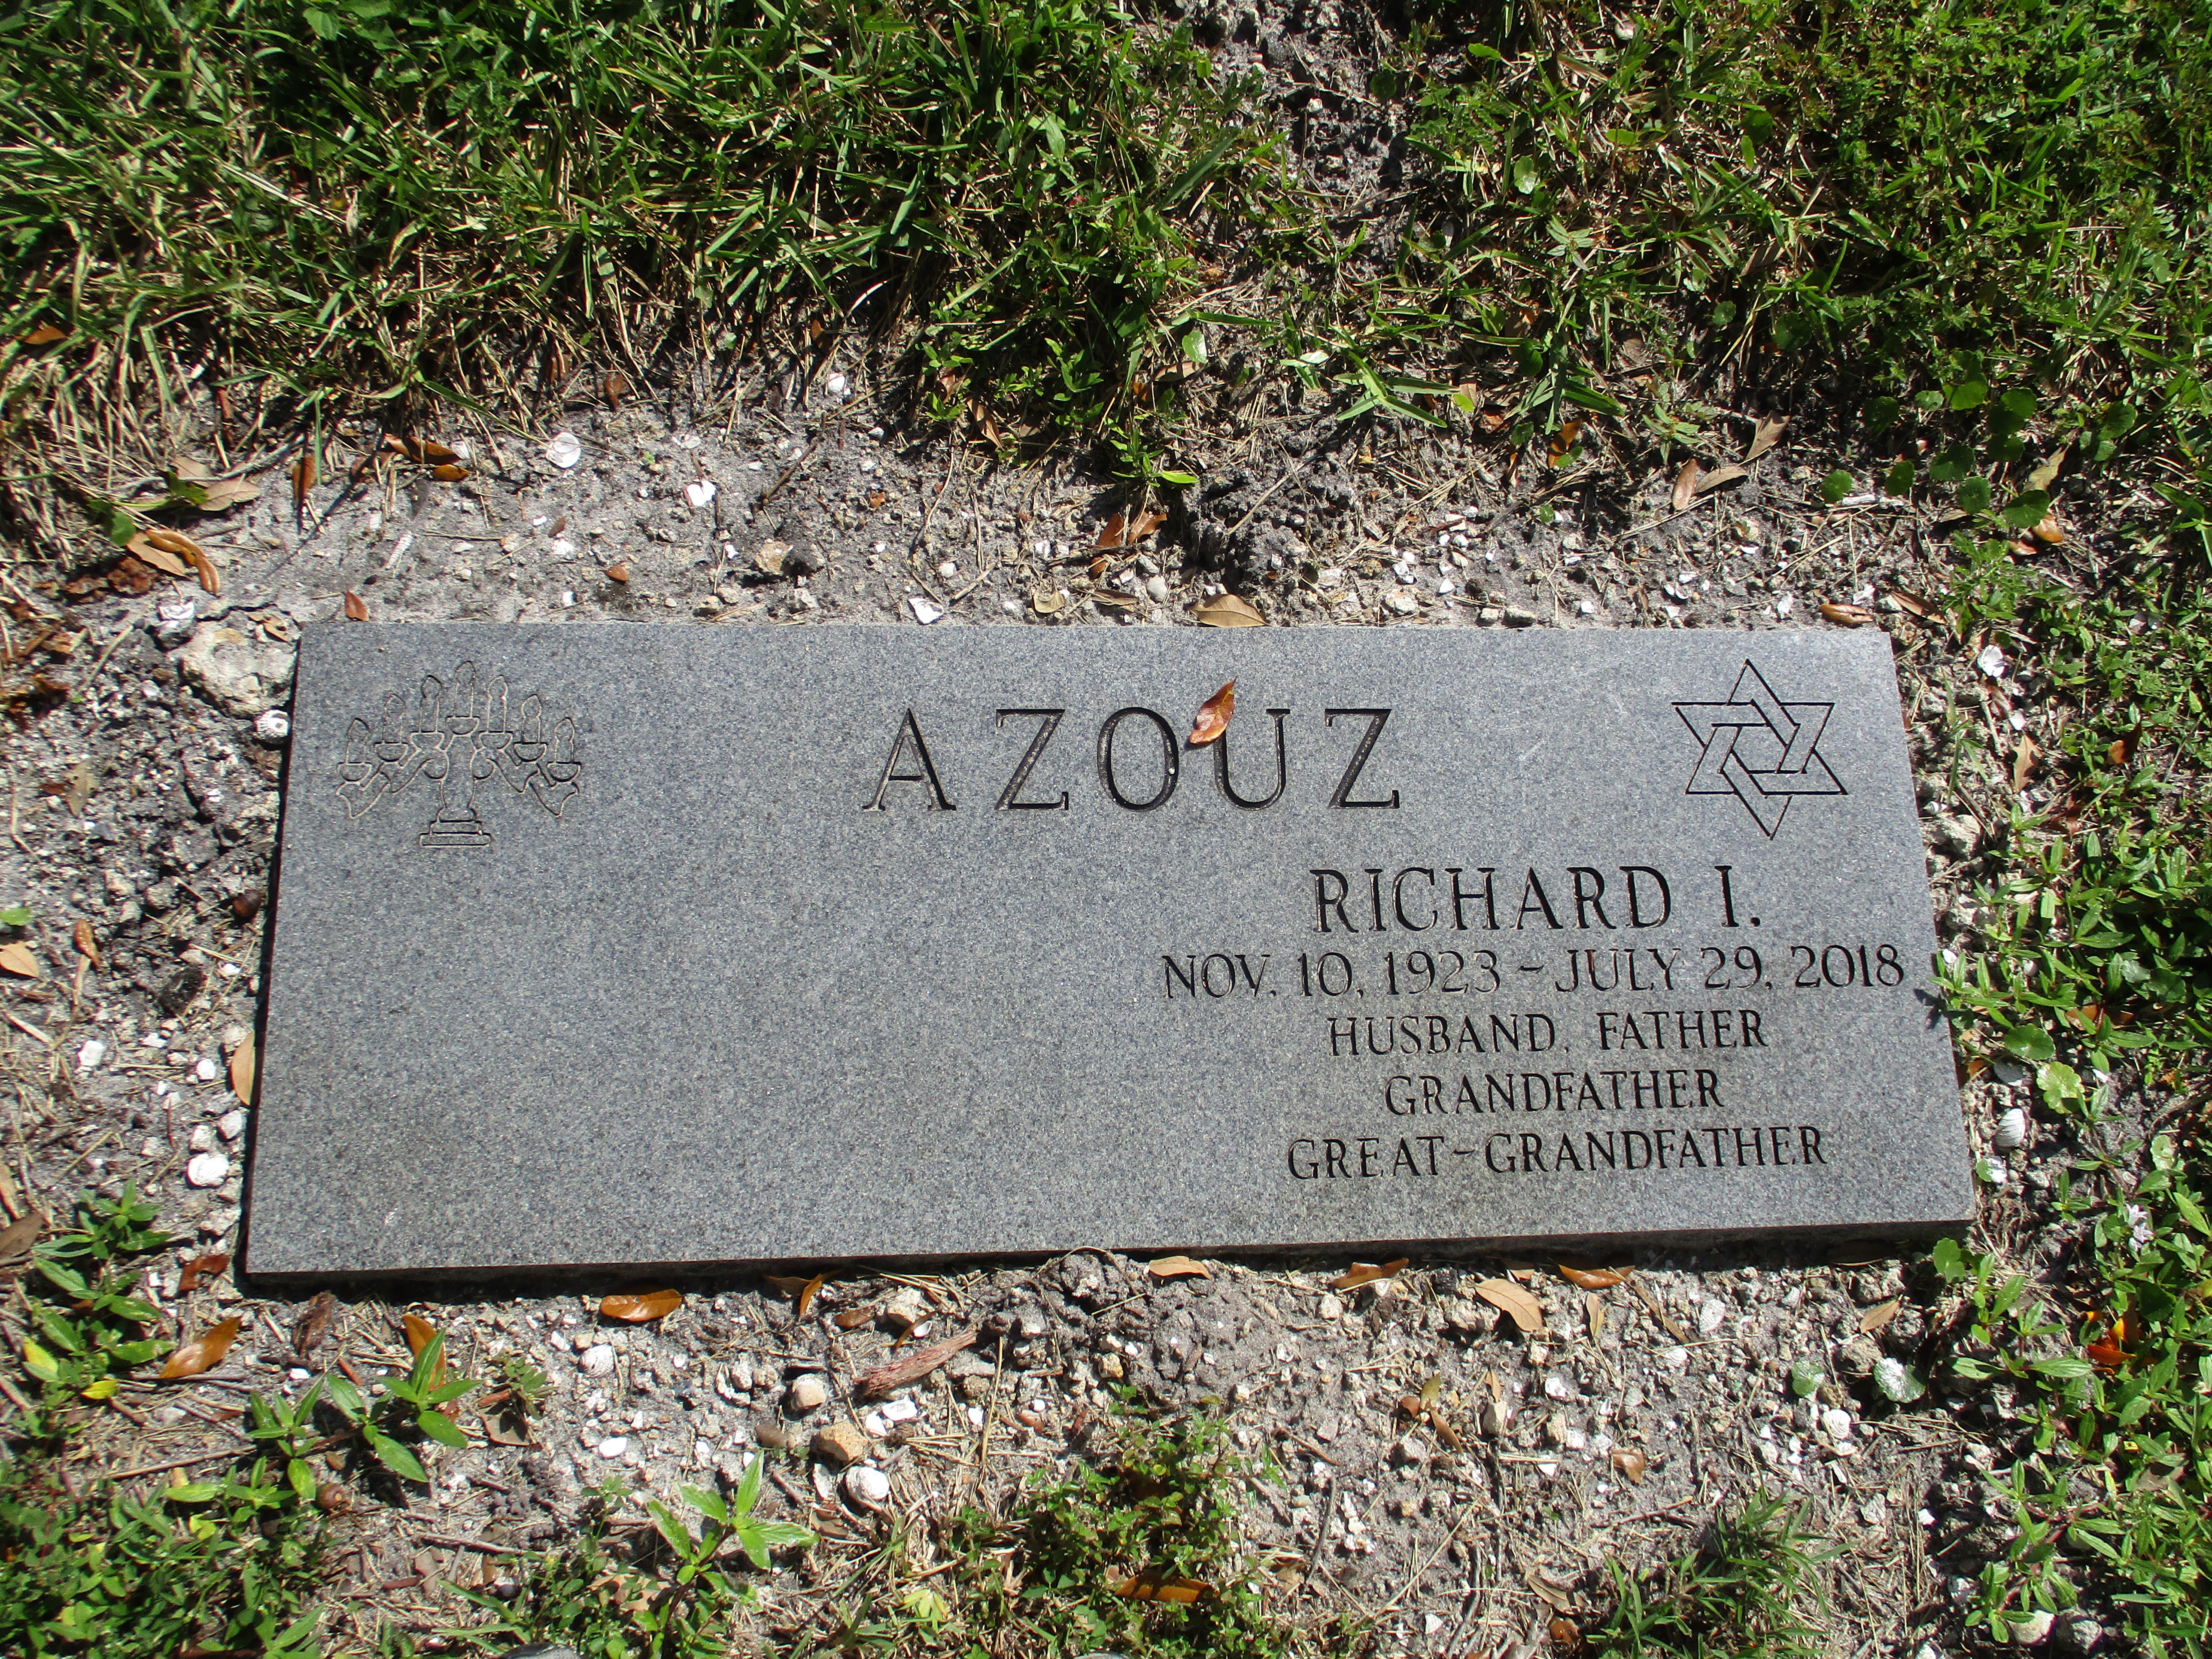 Richard I Azouz